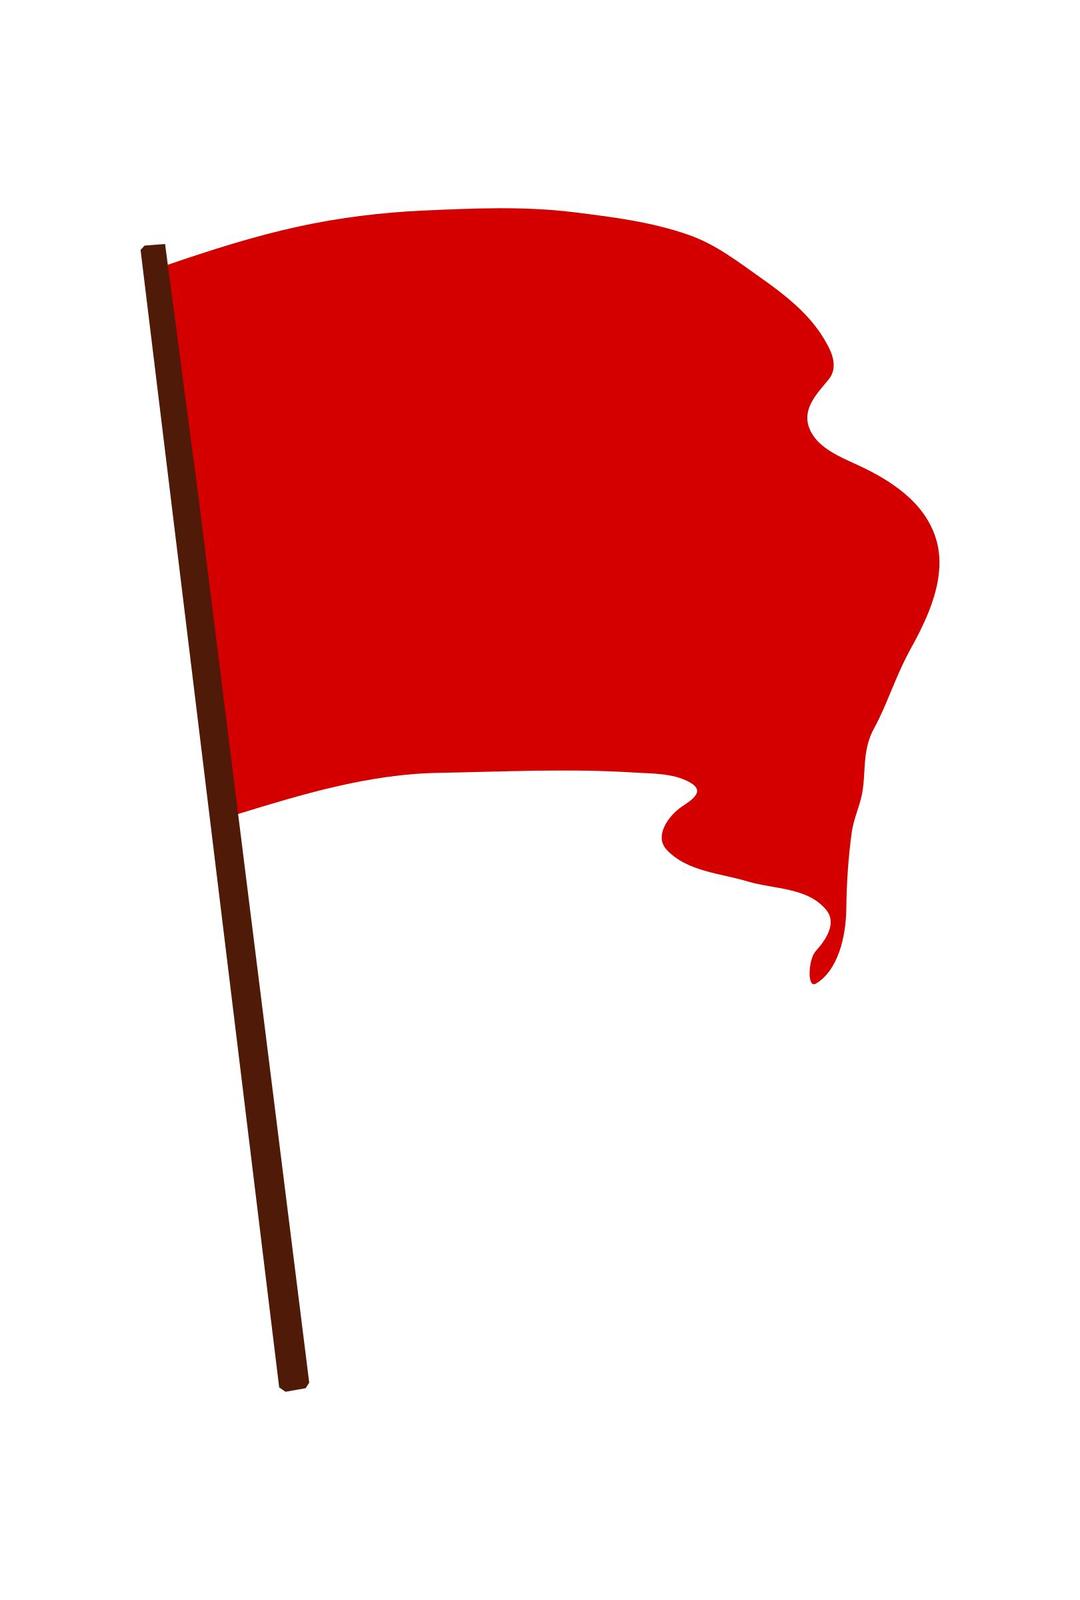 Waving Red Flag png transparent